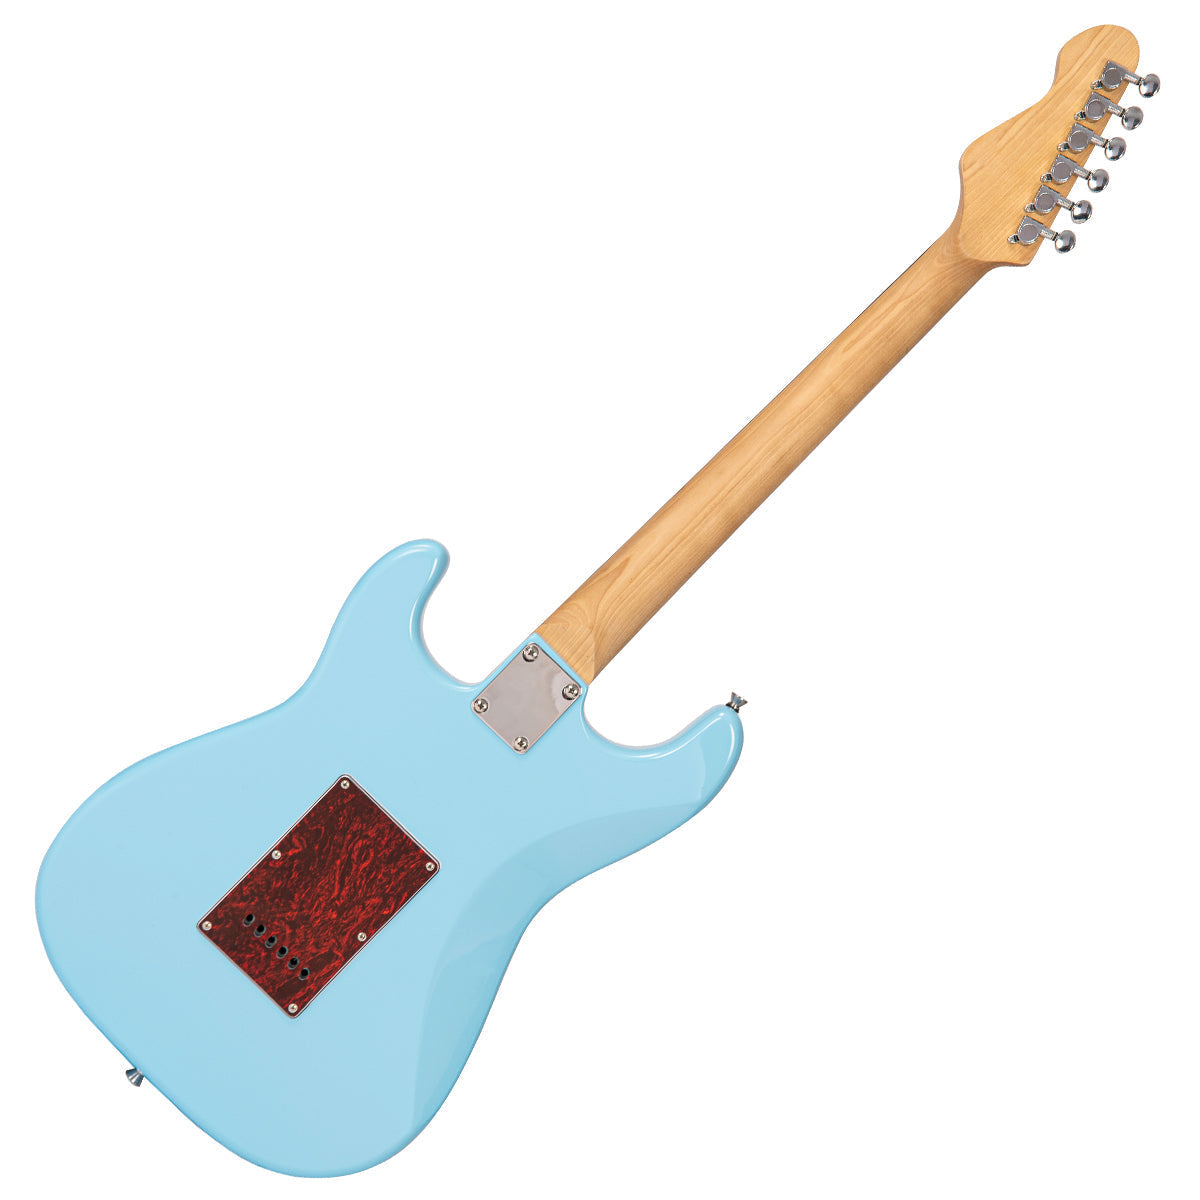 Vintage V60 Coaster Series Electric Guitar ~ Laguna Blue, Electric Guitar for sale at Richards Guitars.